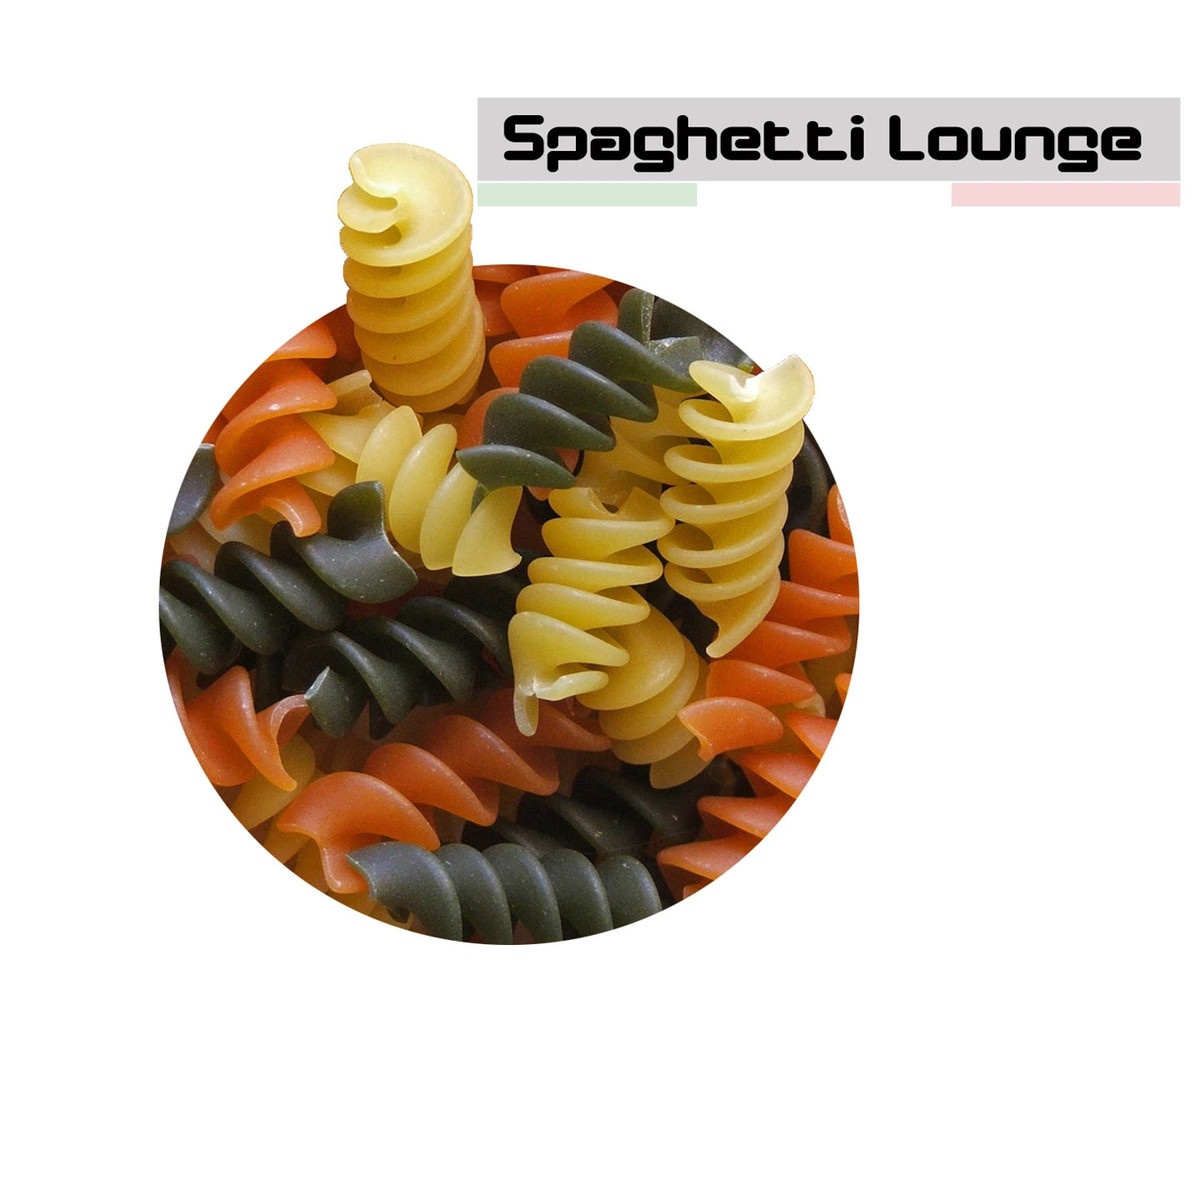 Spaghetti Lounge